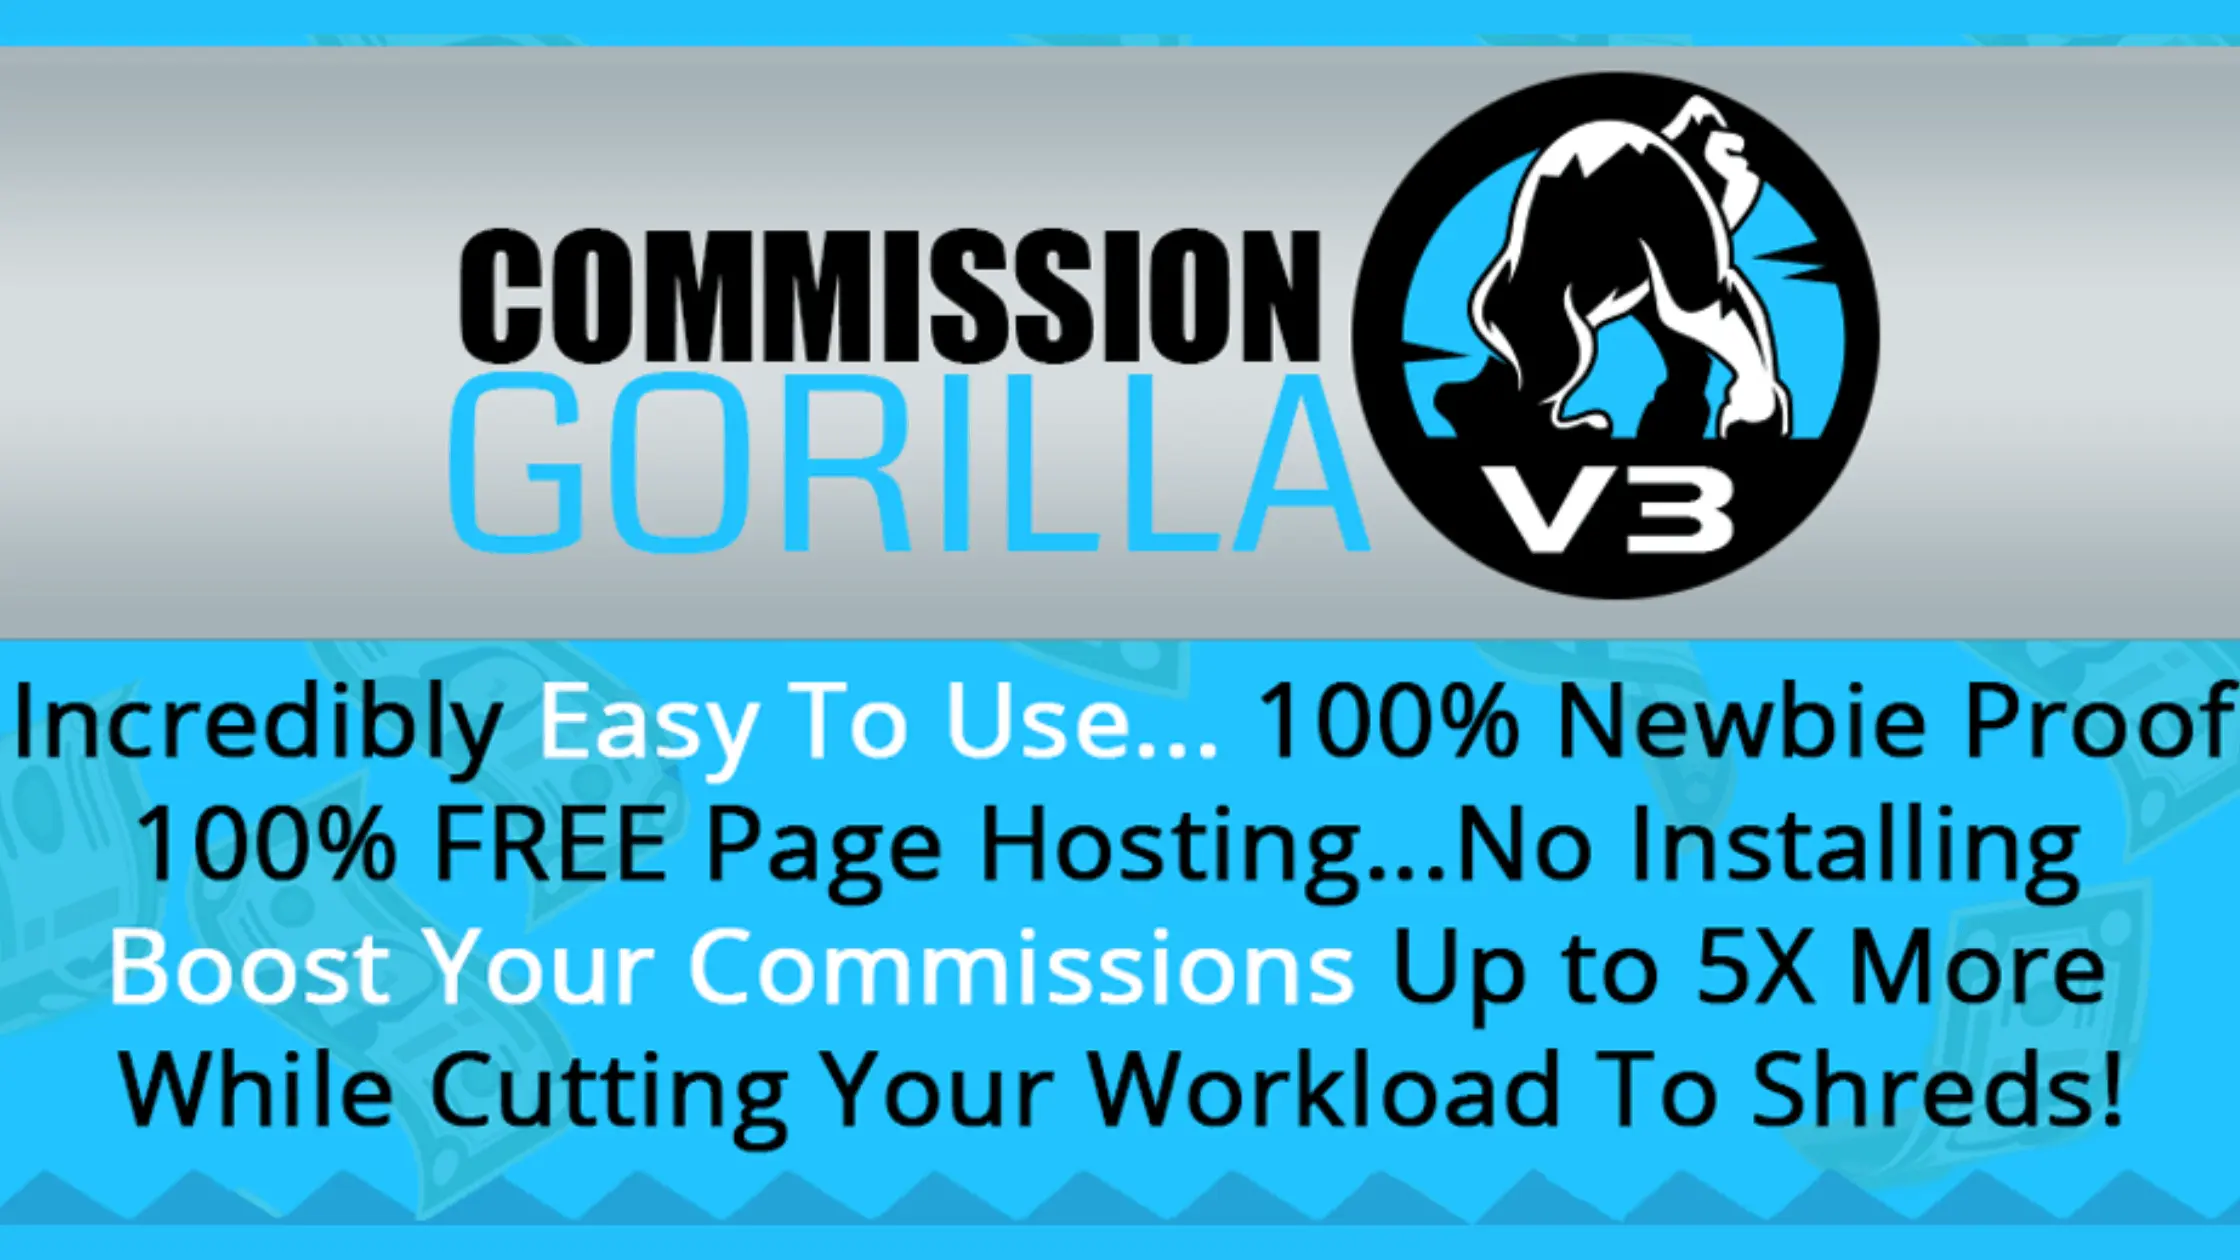 Commission Gorilla V3 Review